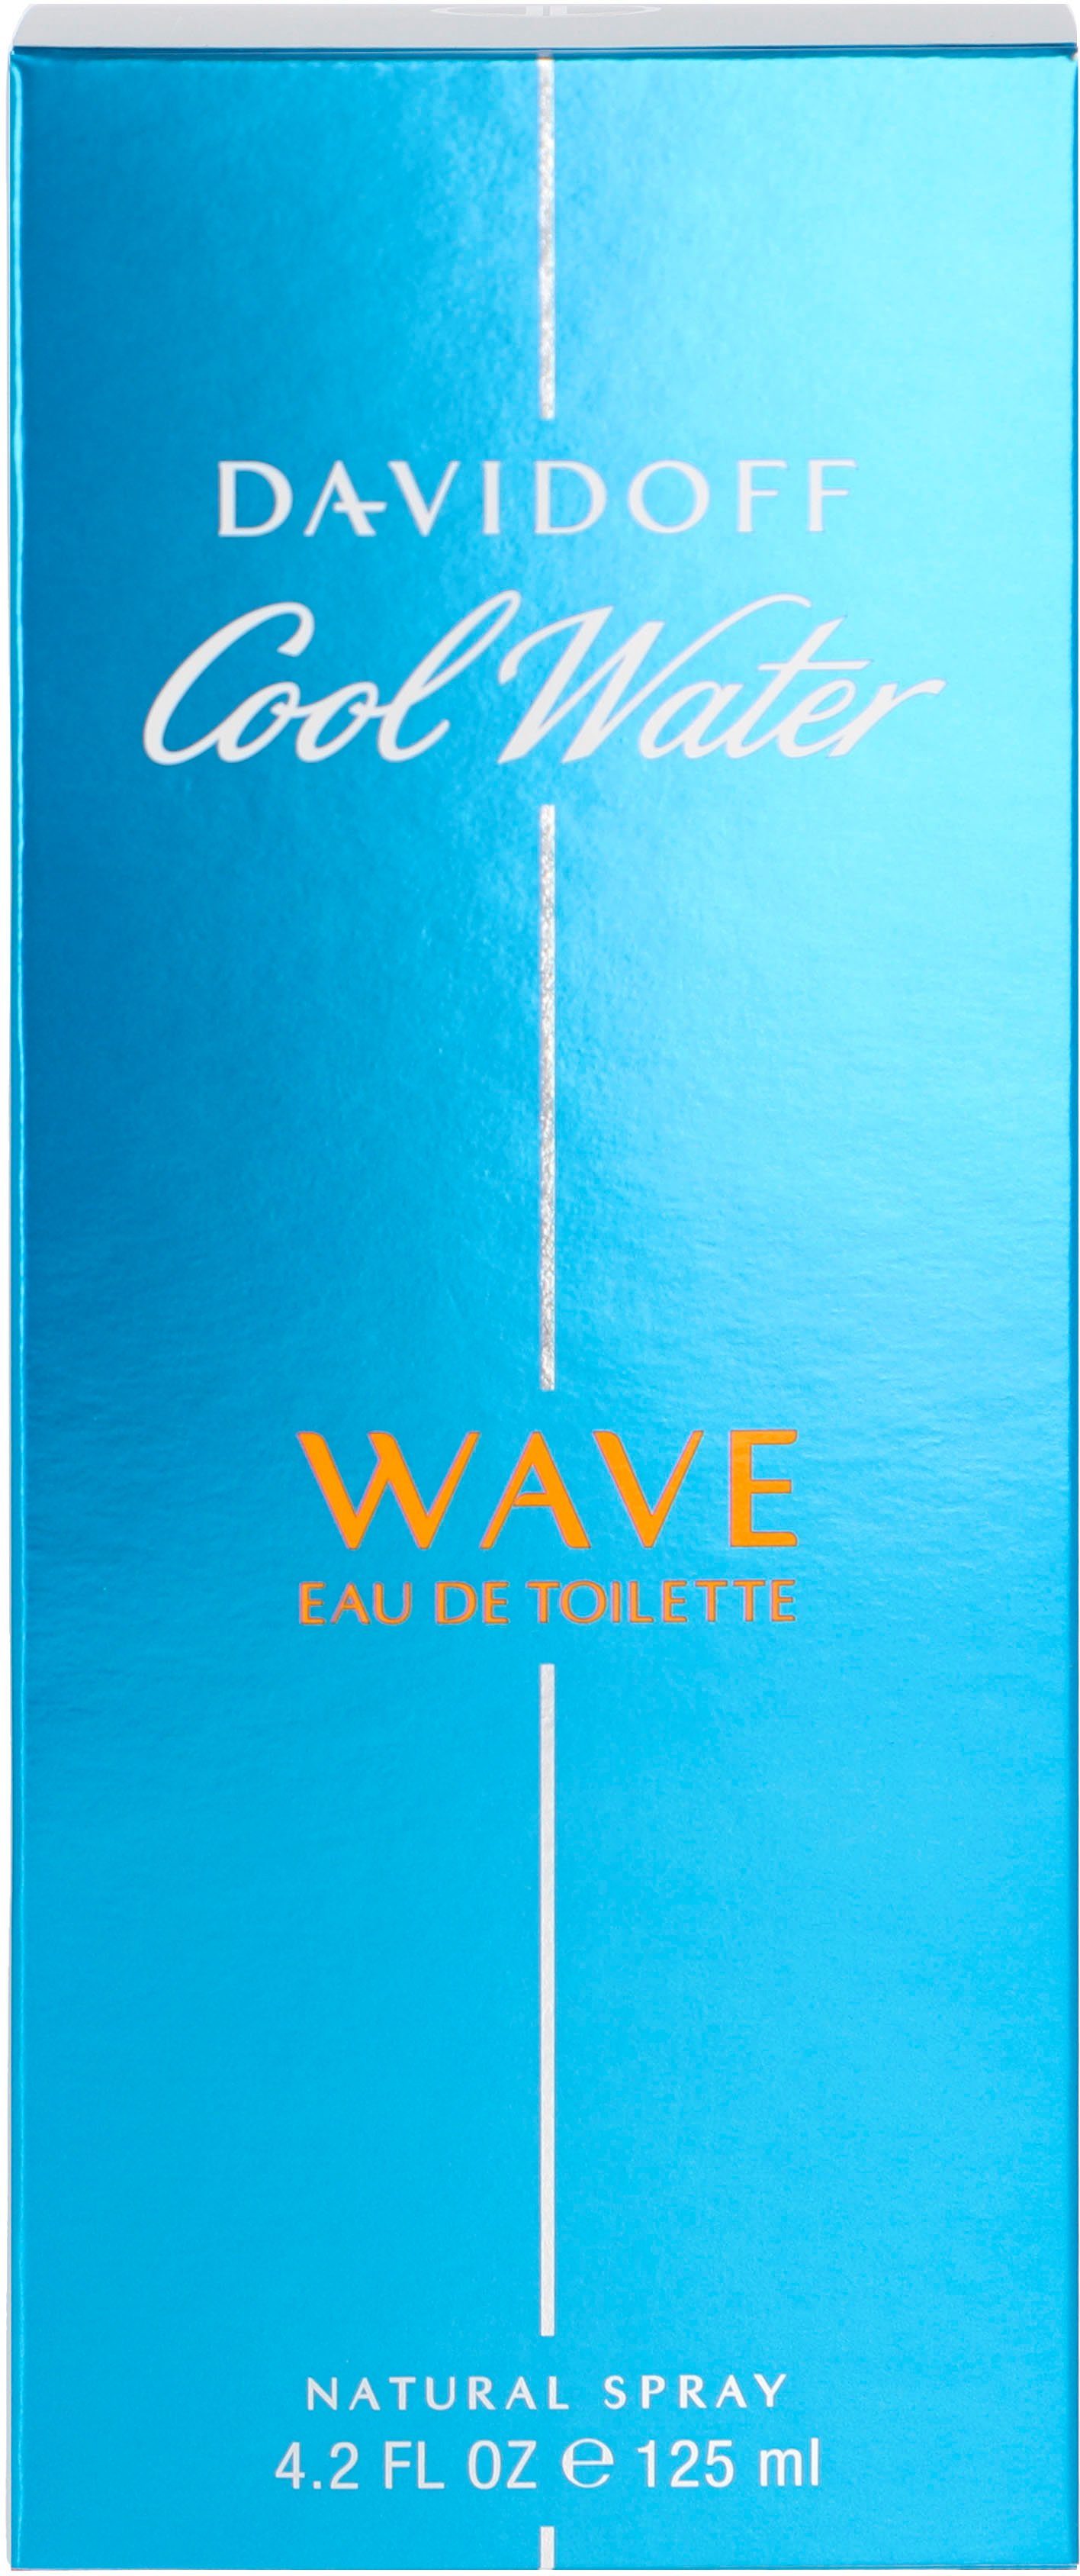 DAVIDOFF Eau Toilette Water de Cool Wave Davidoff Man